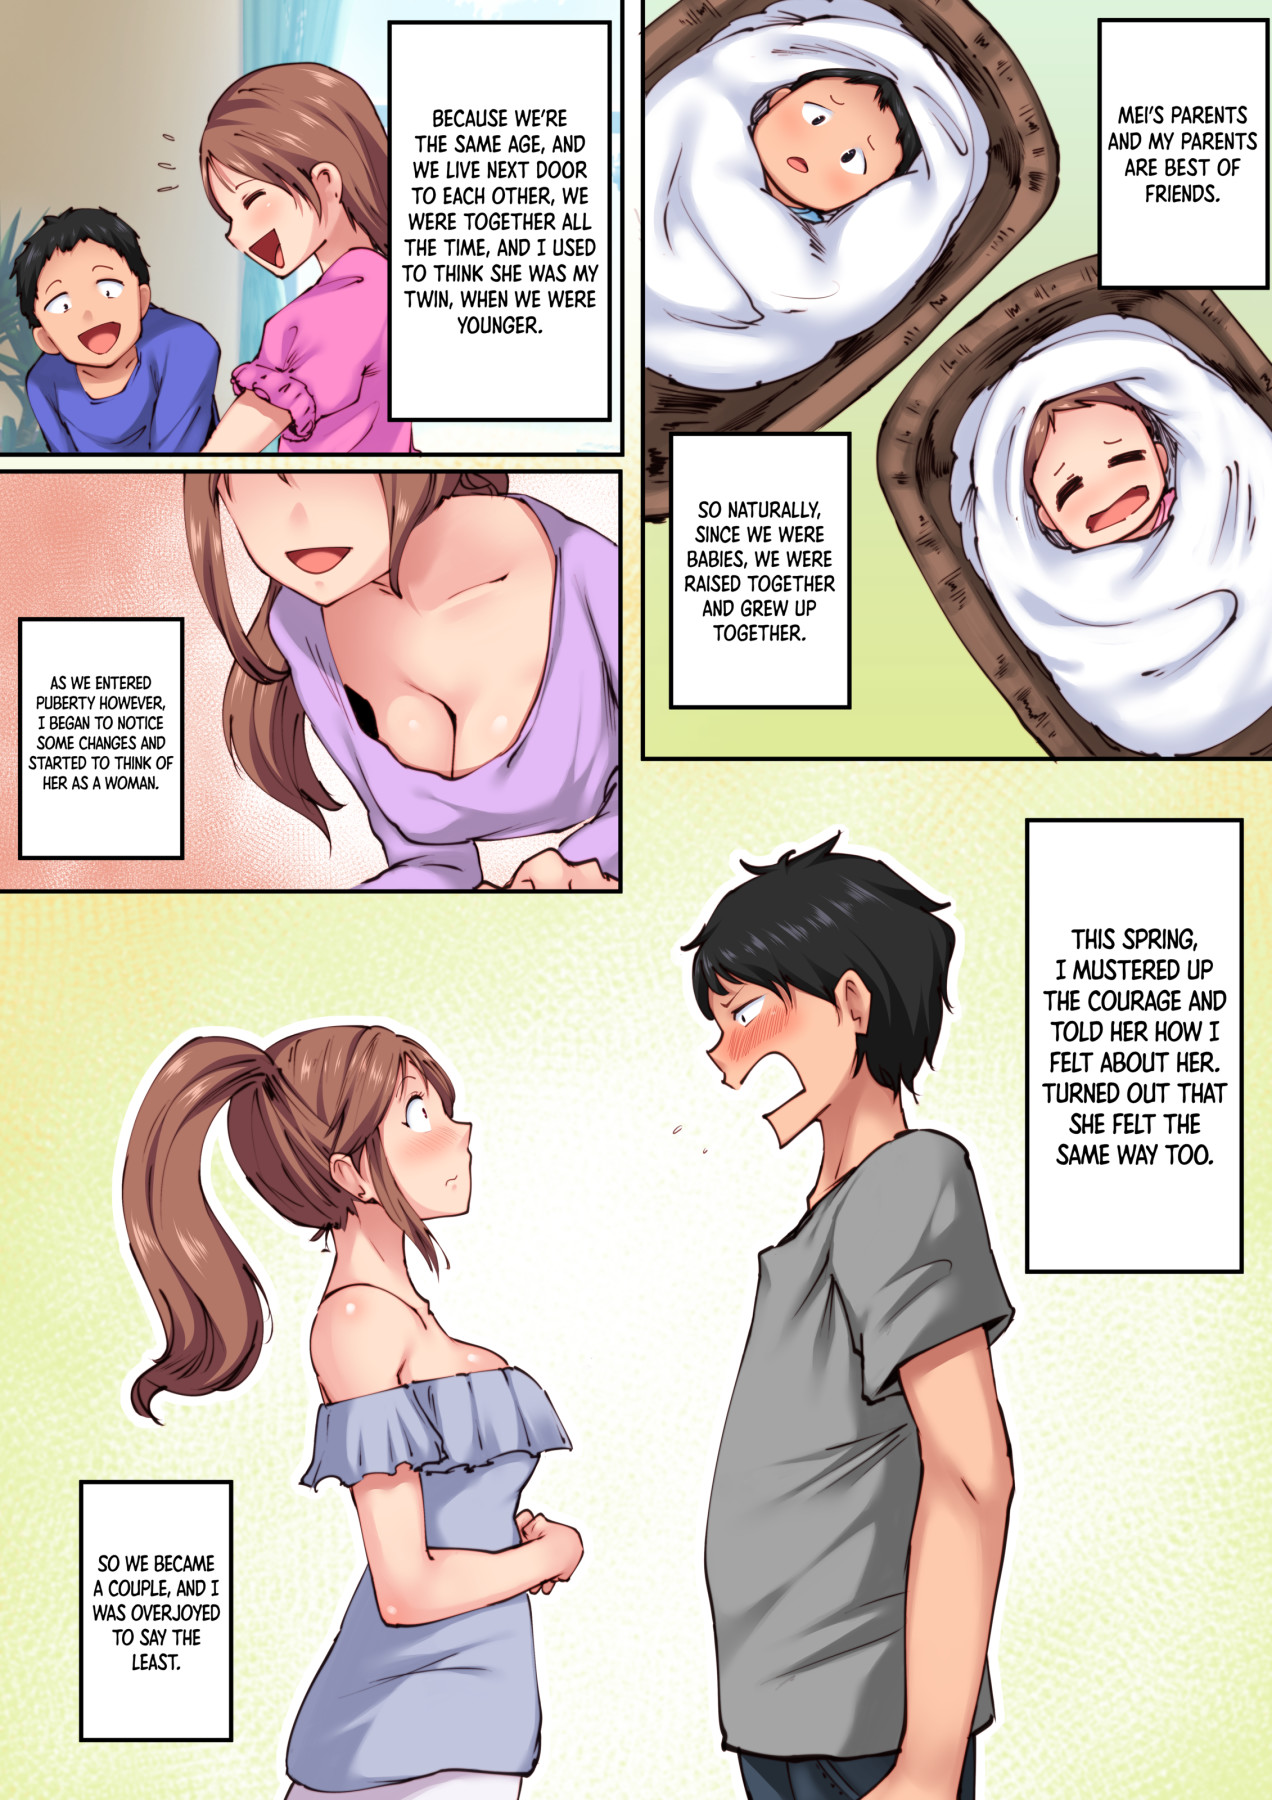 Hentai Manga Comic-Home Alone Romp With My Childhood Friend-Read-3